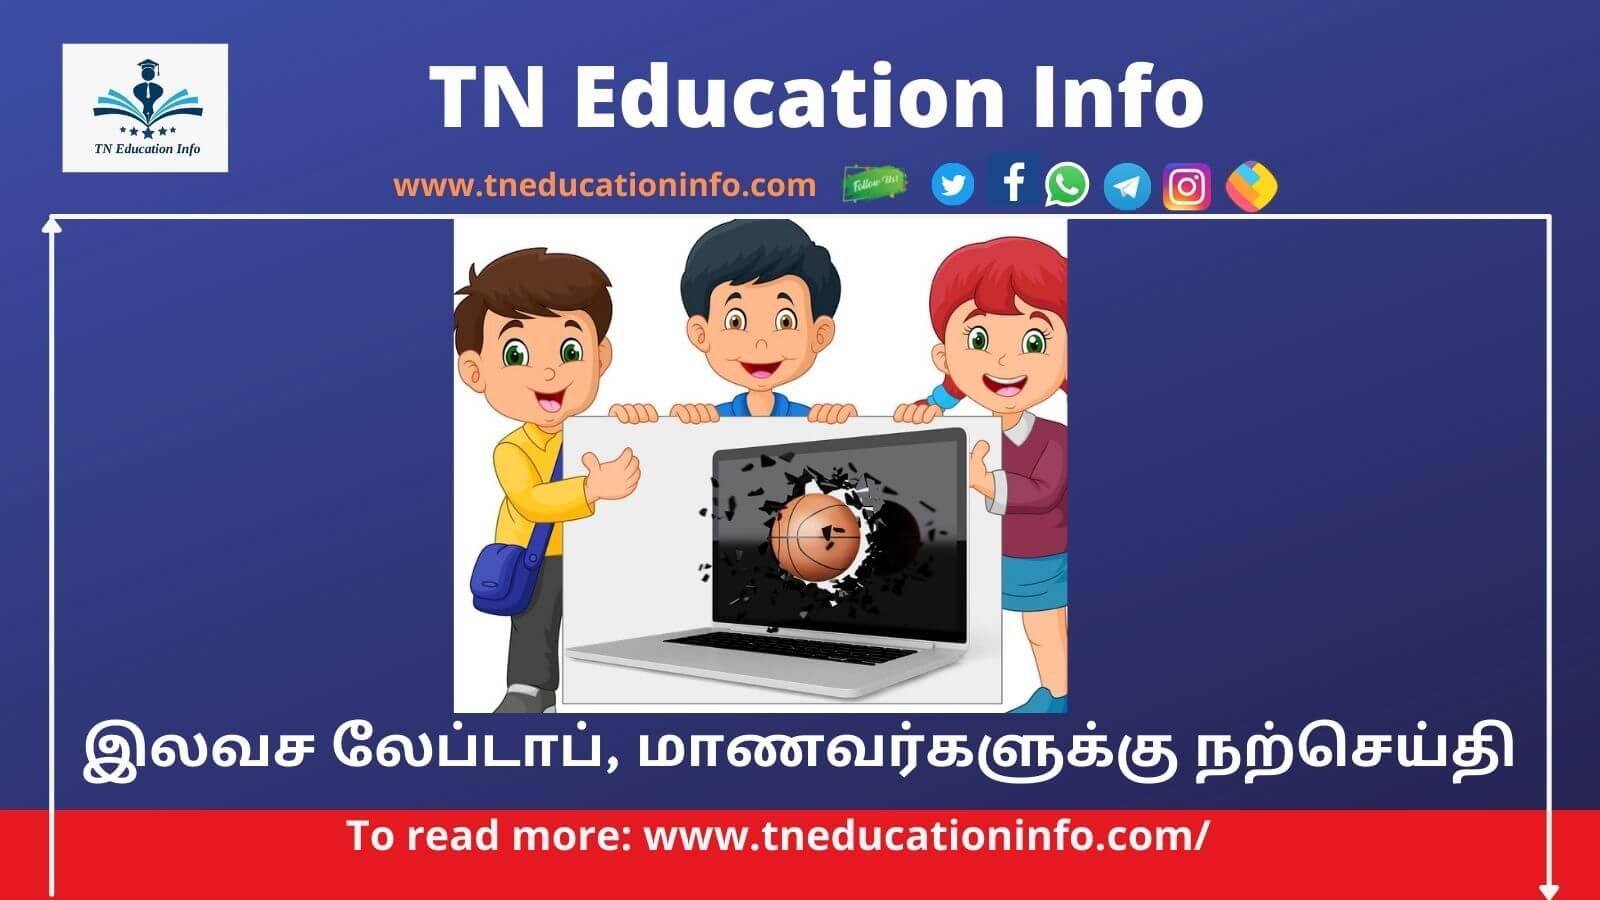 Tamil Nadu government free laptop